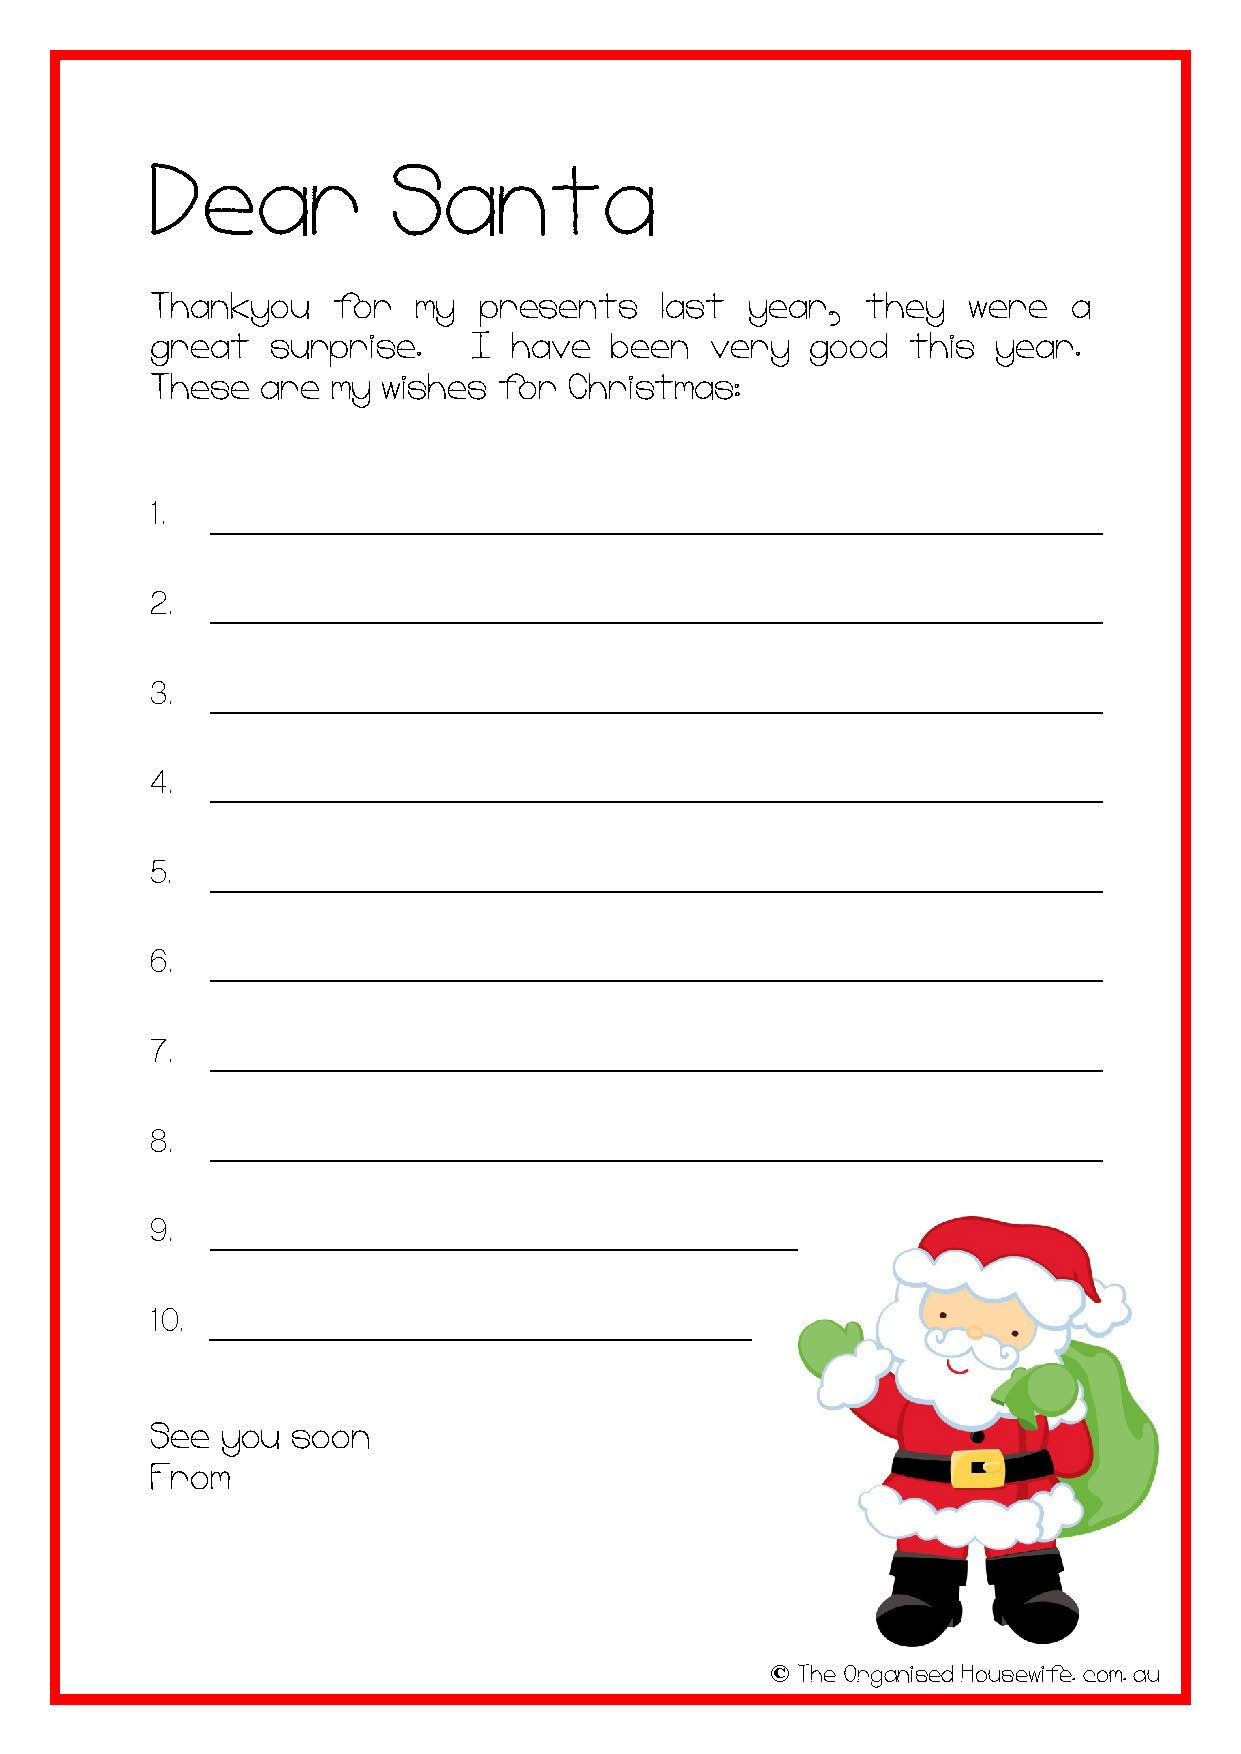 Free Letter to Santa Template Word - Printable Kids Wish List to Santa Pinterest